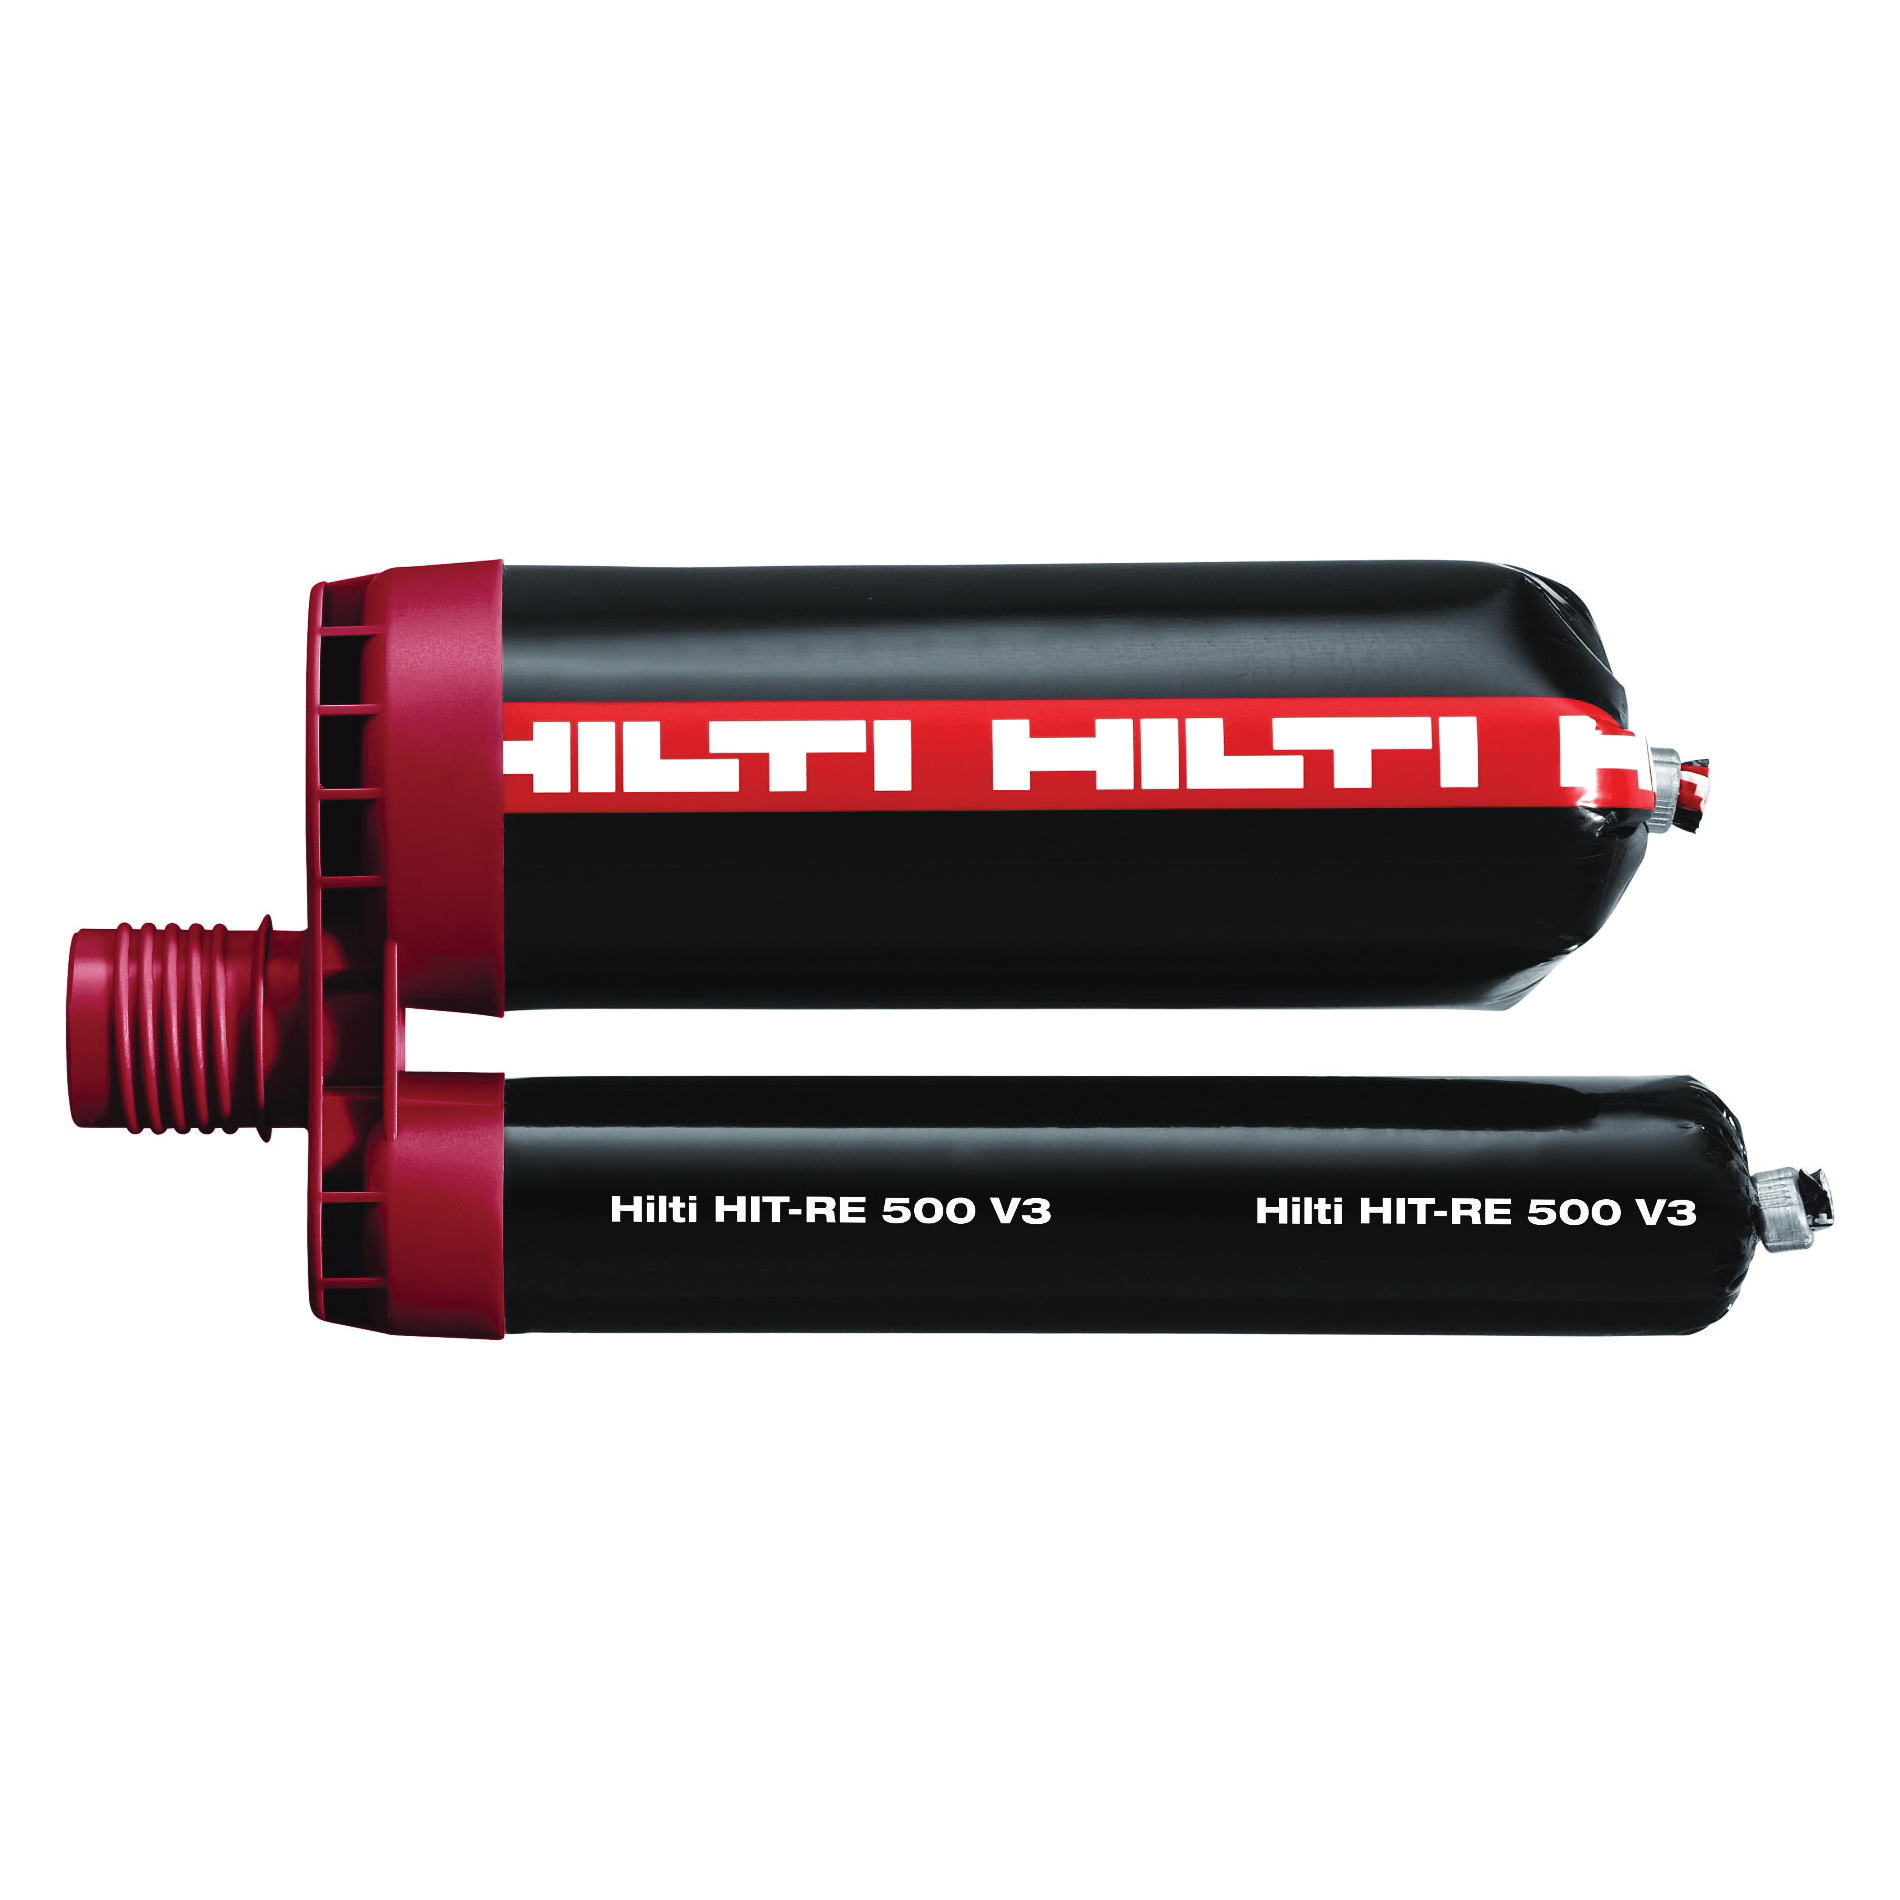 HILTI 3537460 HIT-RE 500 V3 Epoxy Mortar, 11.2 fl-oz Can, Mixture Form, Part A: Light Gray/Part B: Red